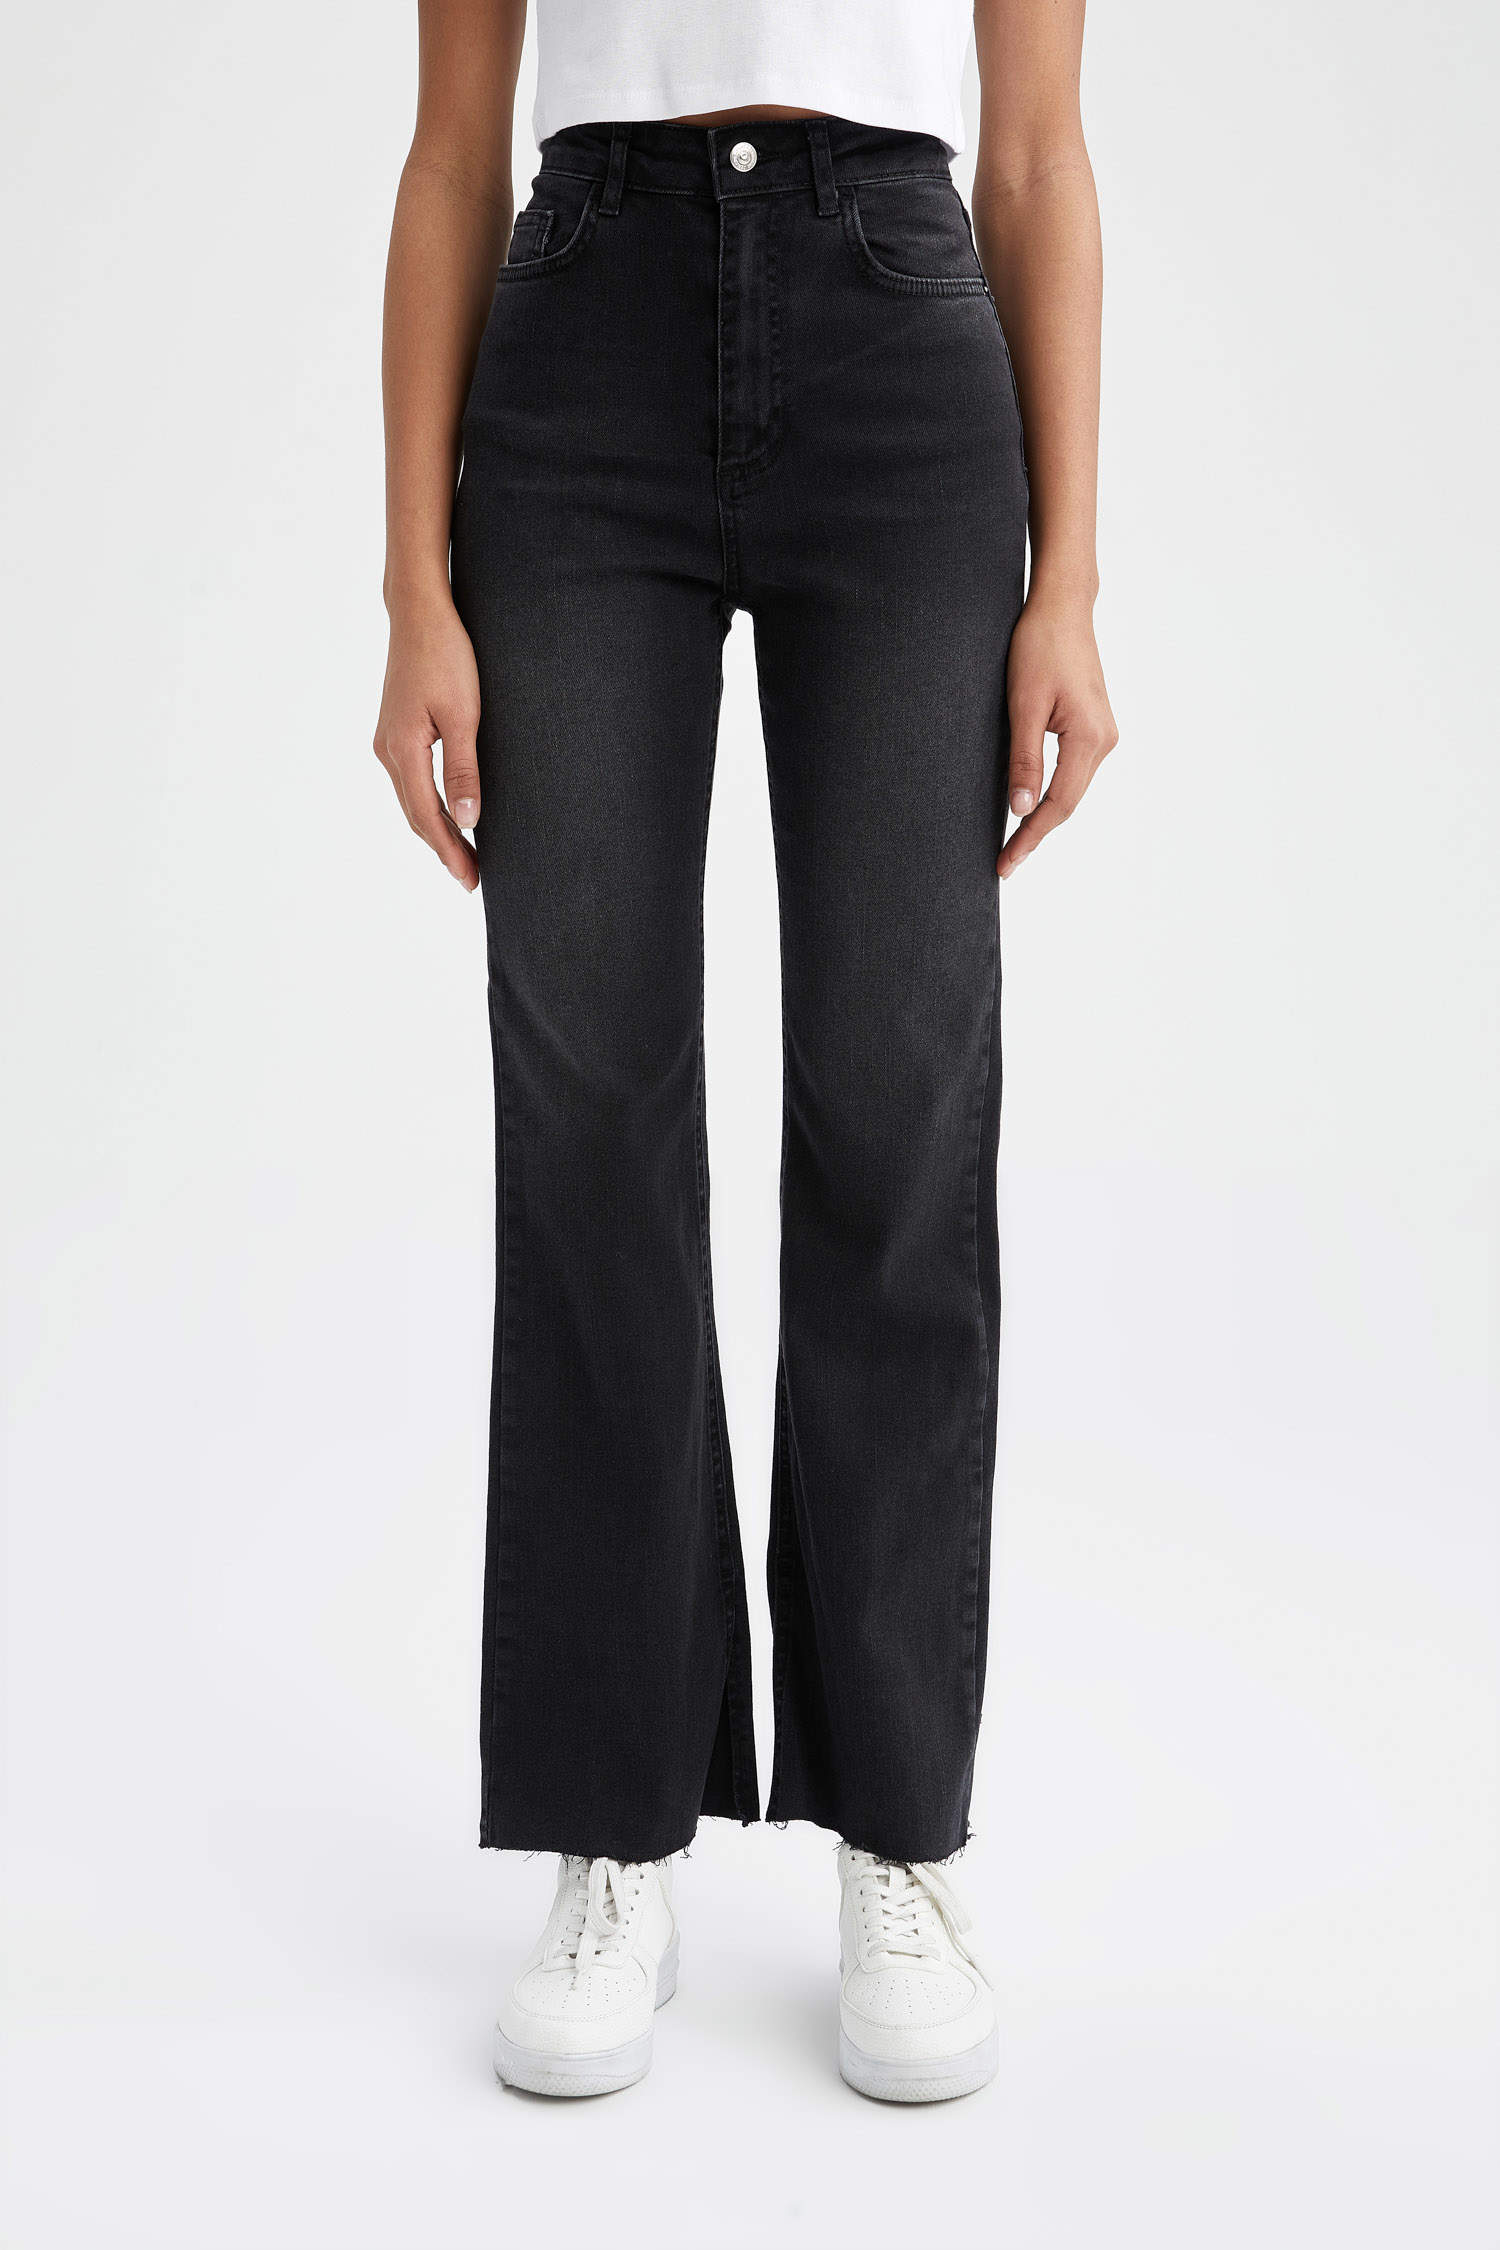 Black WOMEN High Waisted Side Split Jeans 2409502 | DeFacto